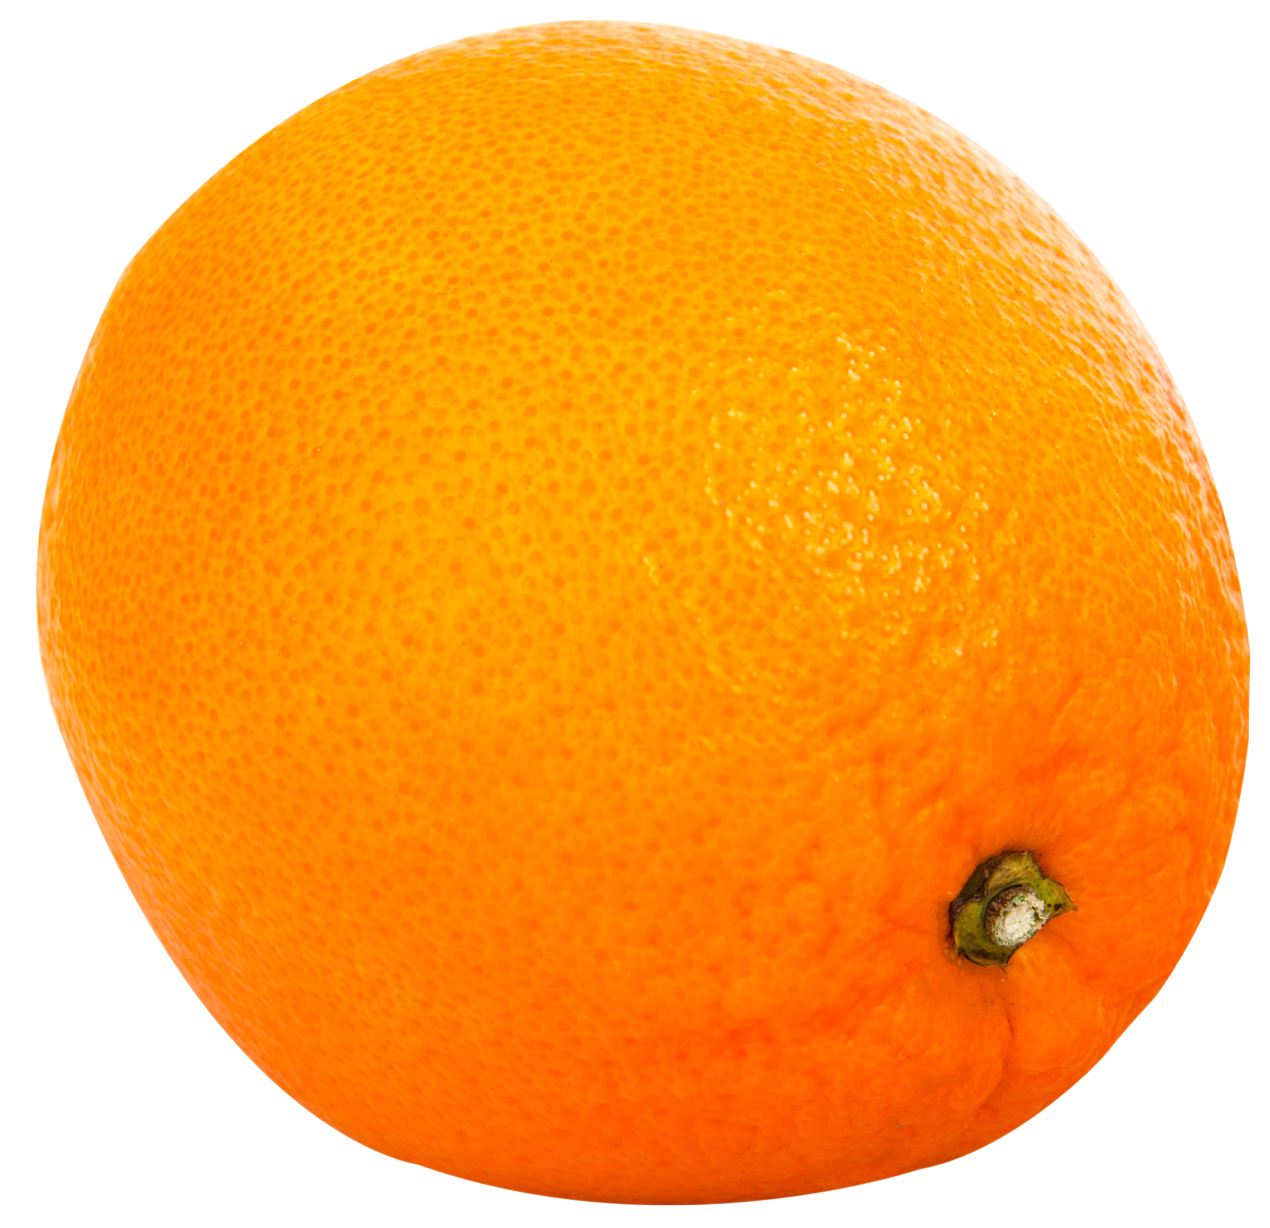 Orange Fruit PNG Images, Orange Juice, Orange Fruit, Orange Slice ...